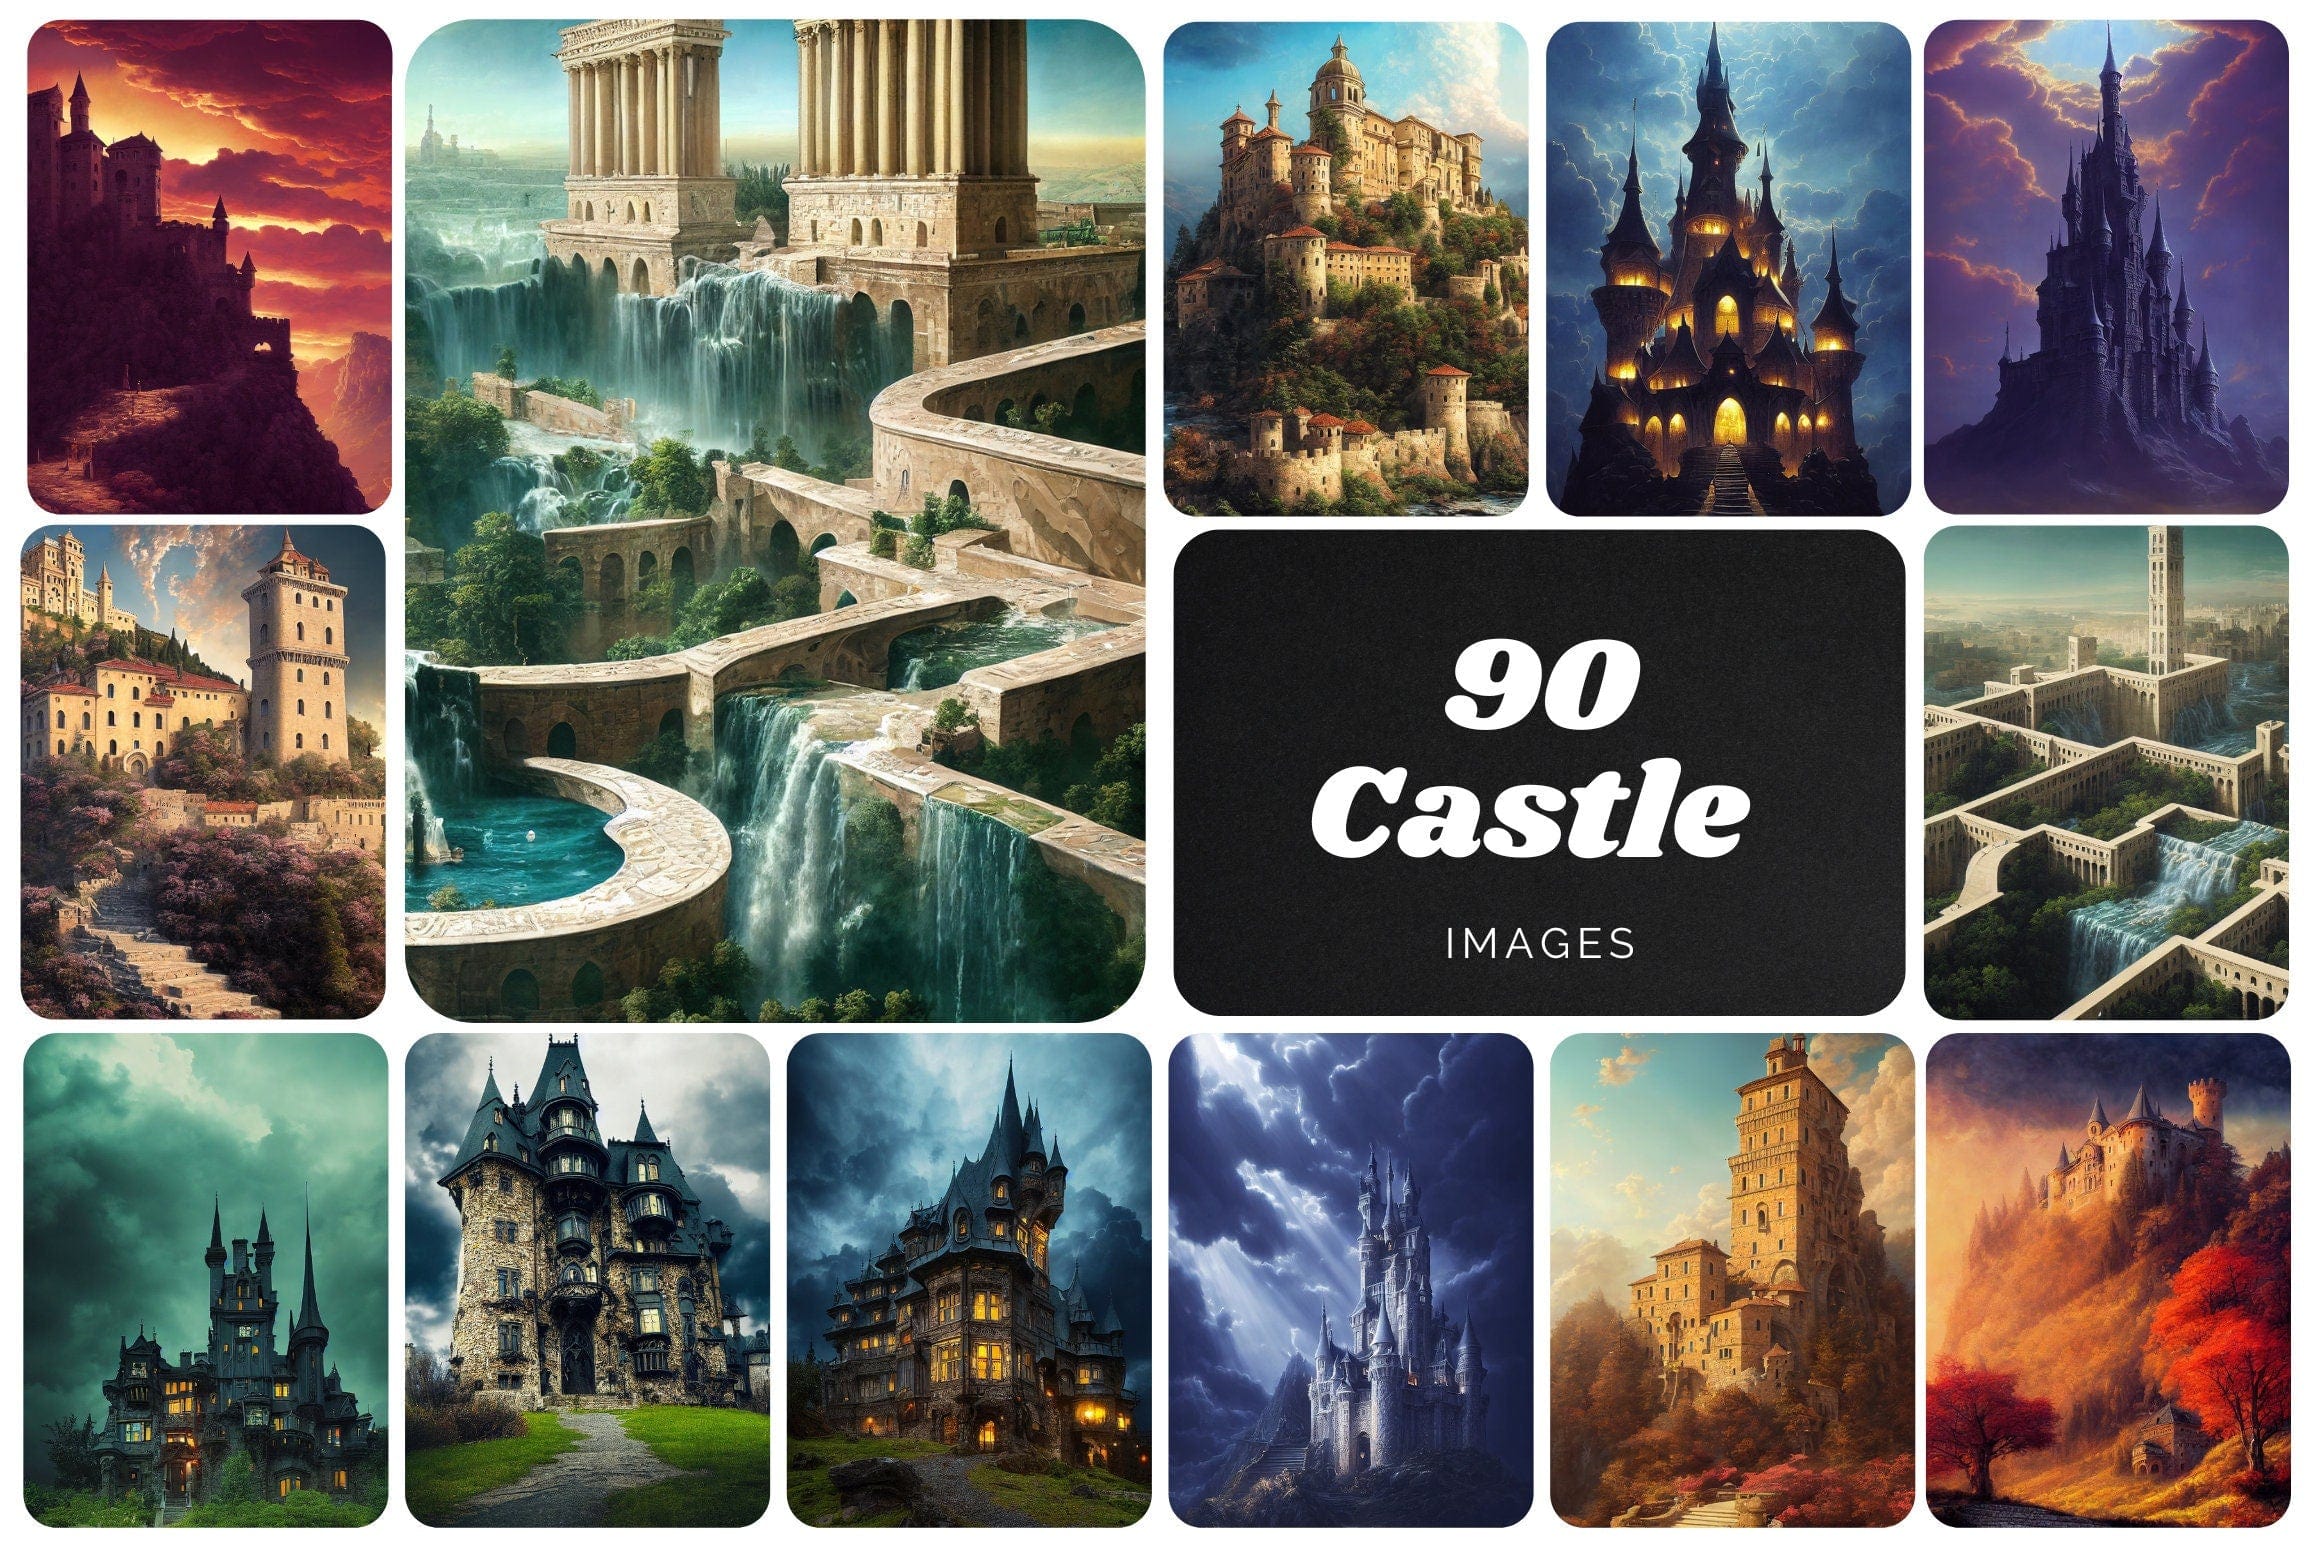 90 Unique Surreal Castle Images - Perfect for Home Decor, Graphic Design, and Fantasy Art - A Spectacular Collection of Dreamlike Castles Digital Download Sumobundle